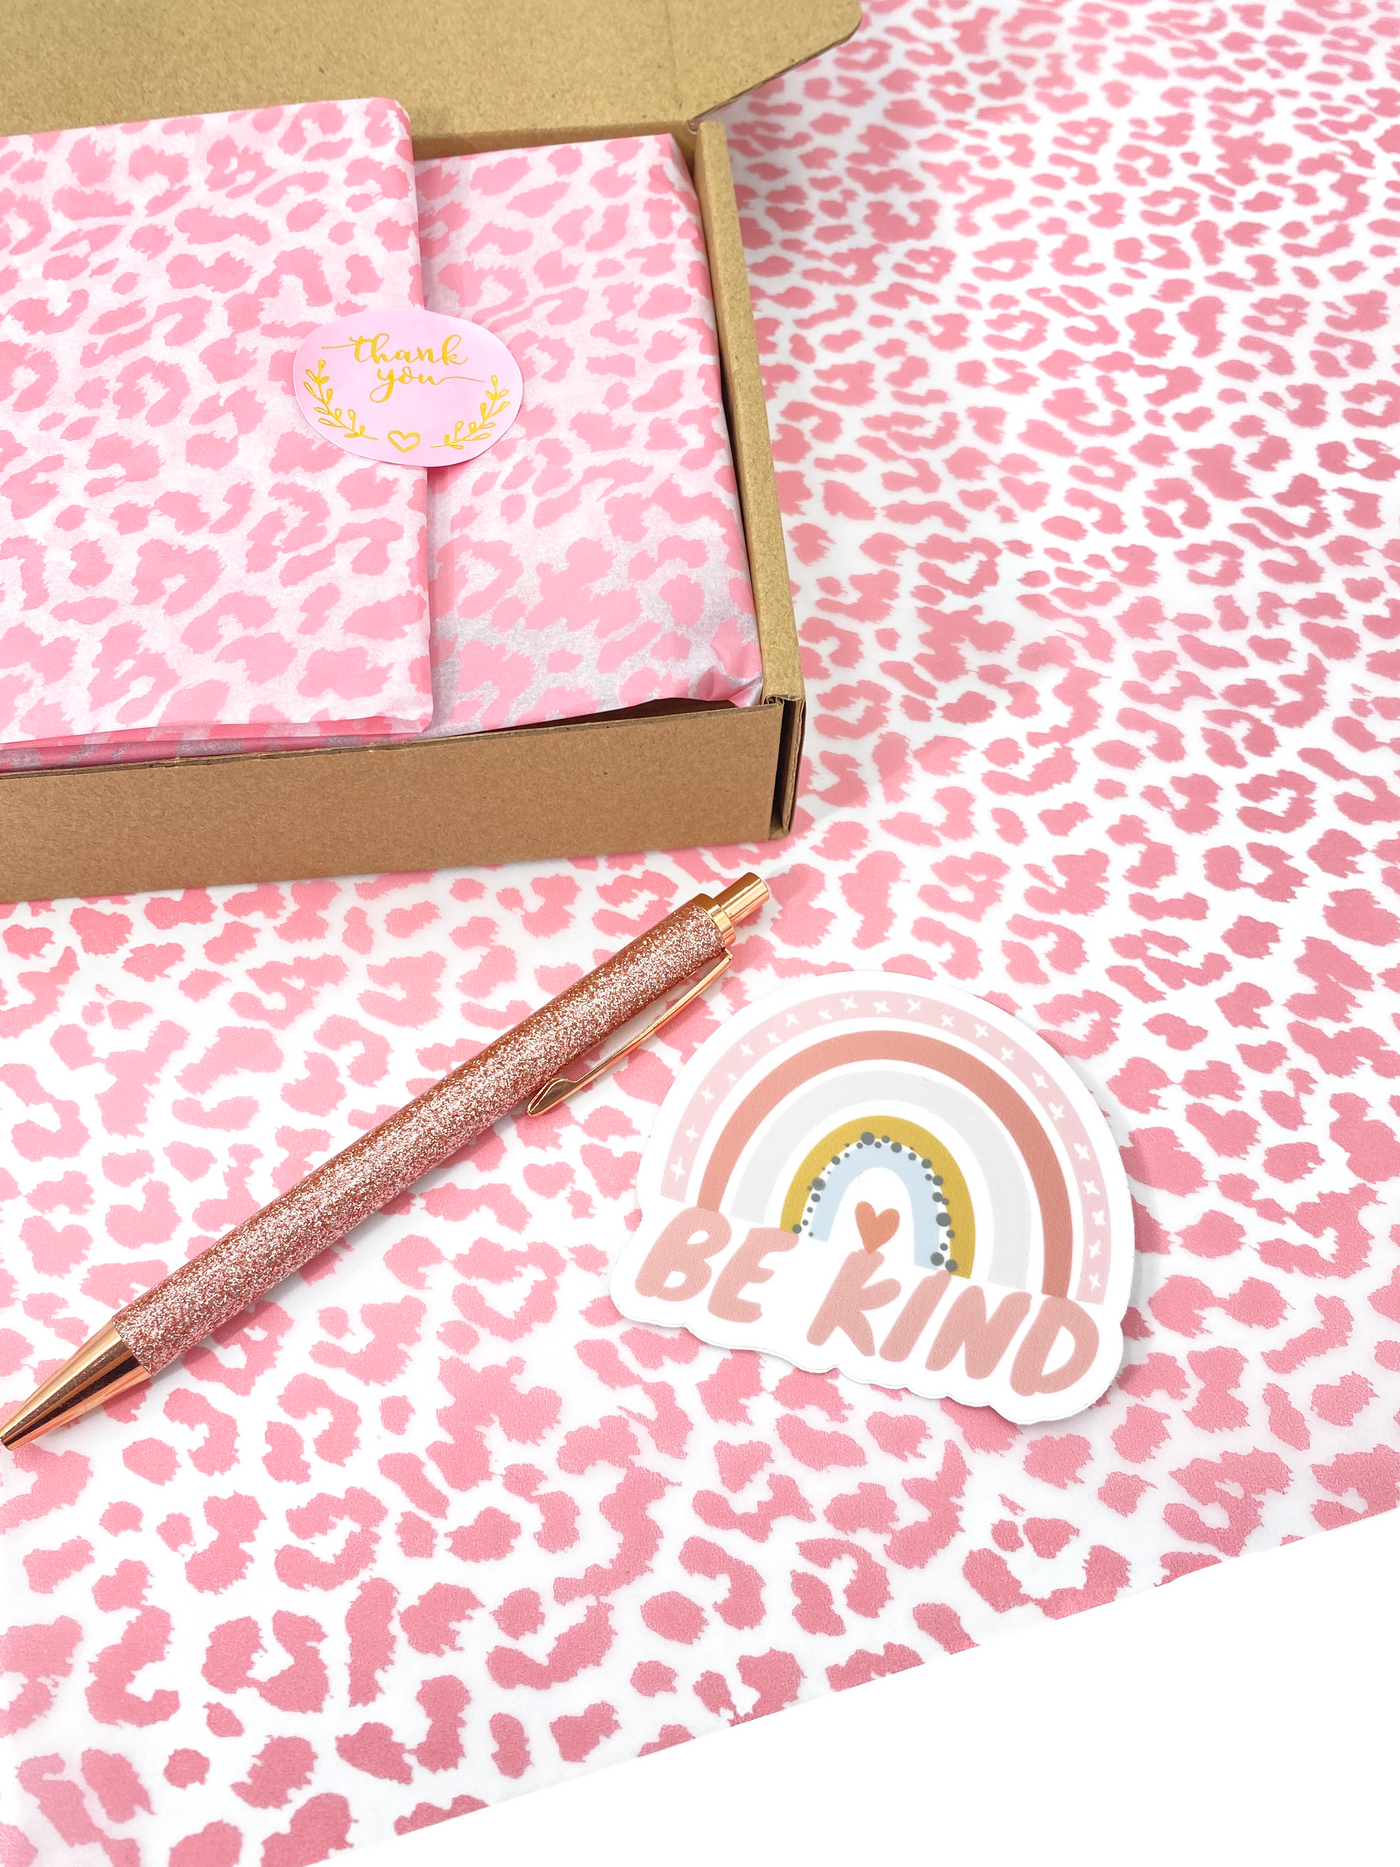 Acid-Free Tissue Paper - Pink Leopard Print